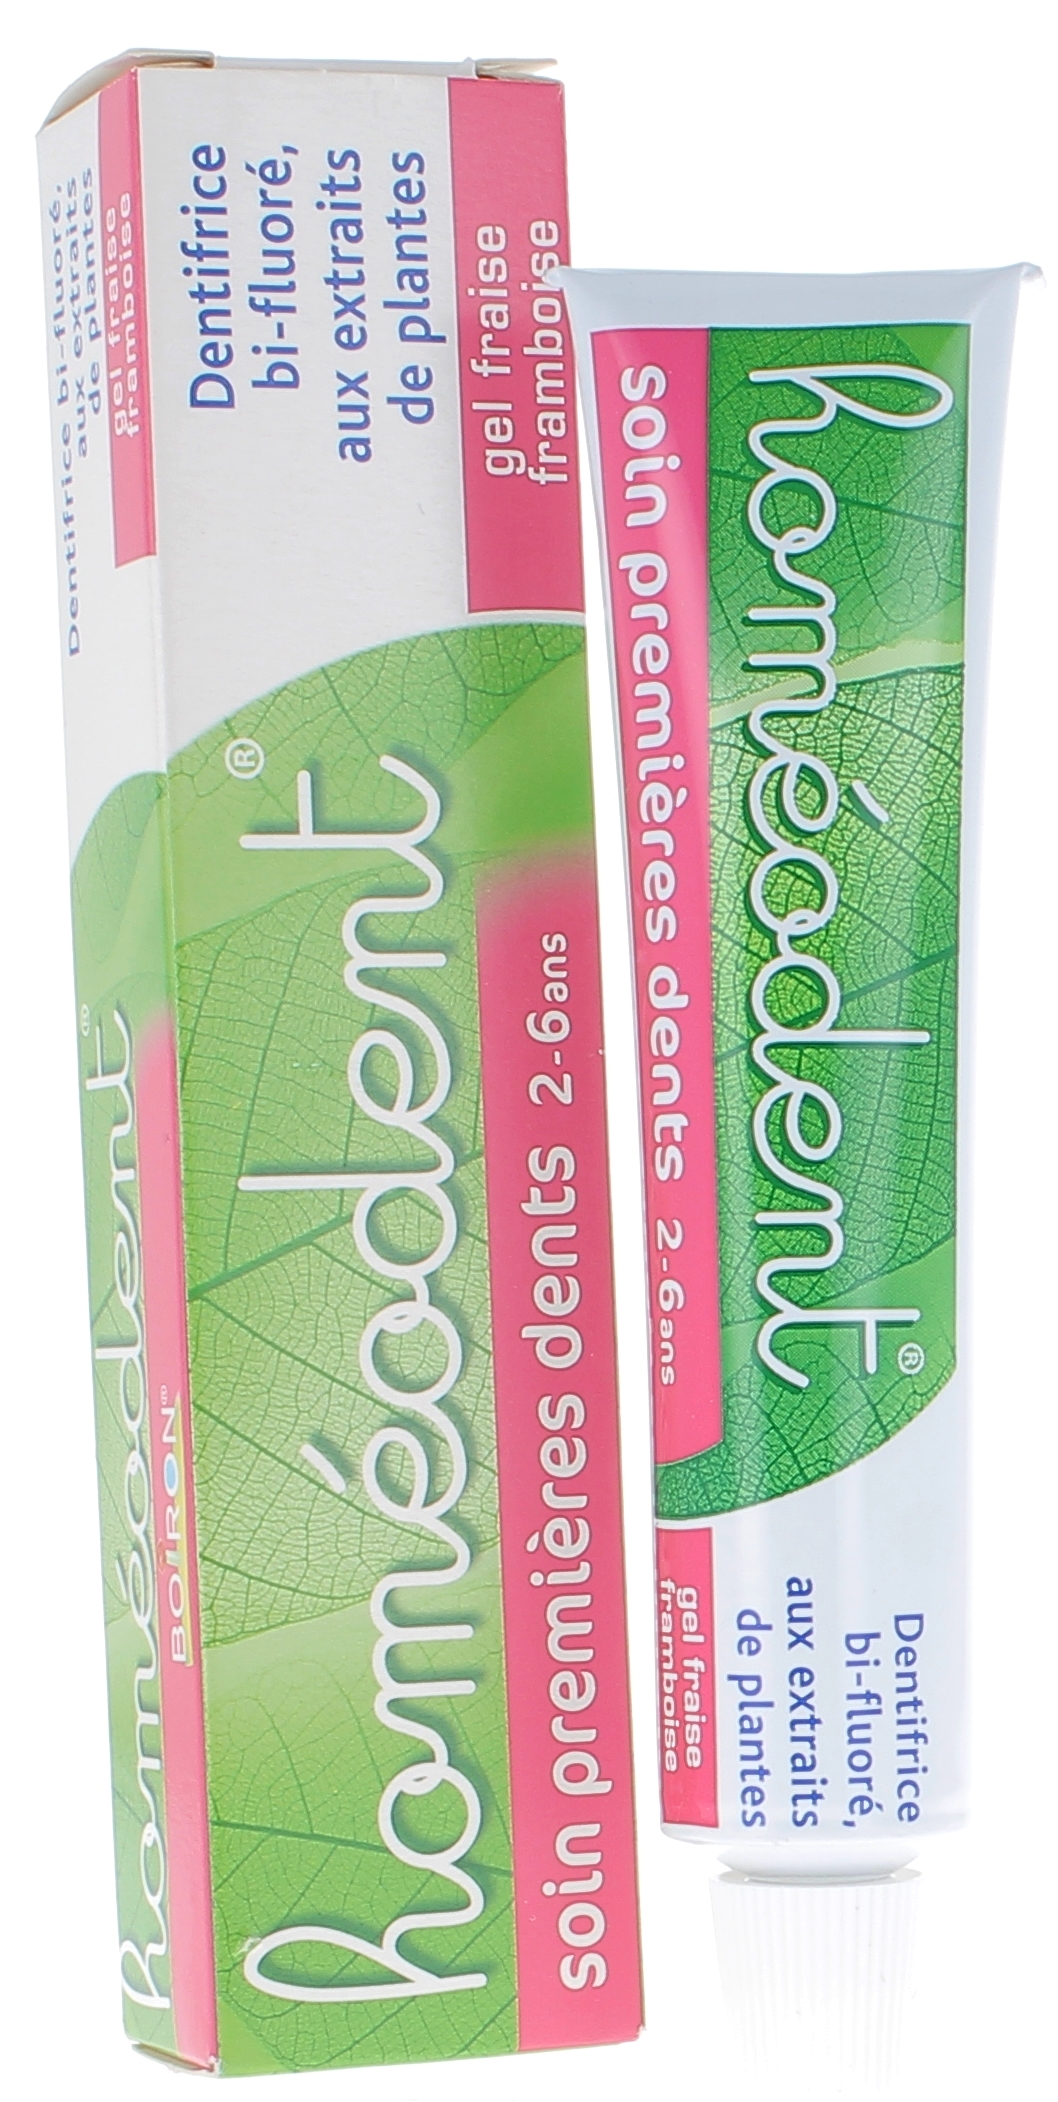 Homéodent soin premières dents 2-6 ans gel fraise framboise Boiron - tube de 50 ml